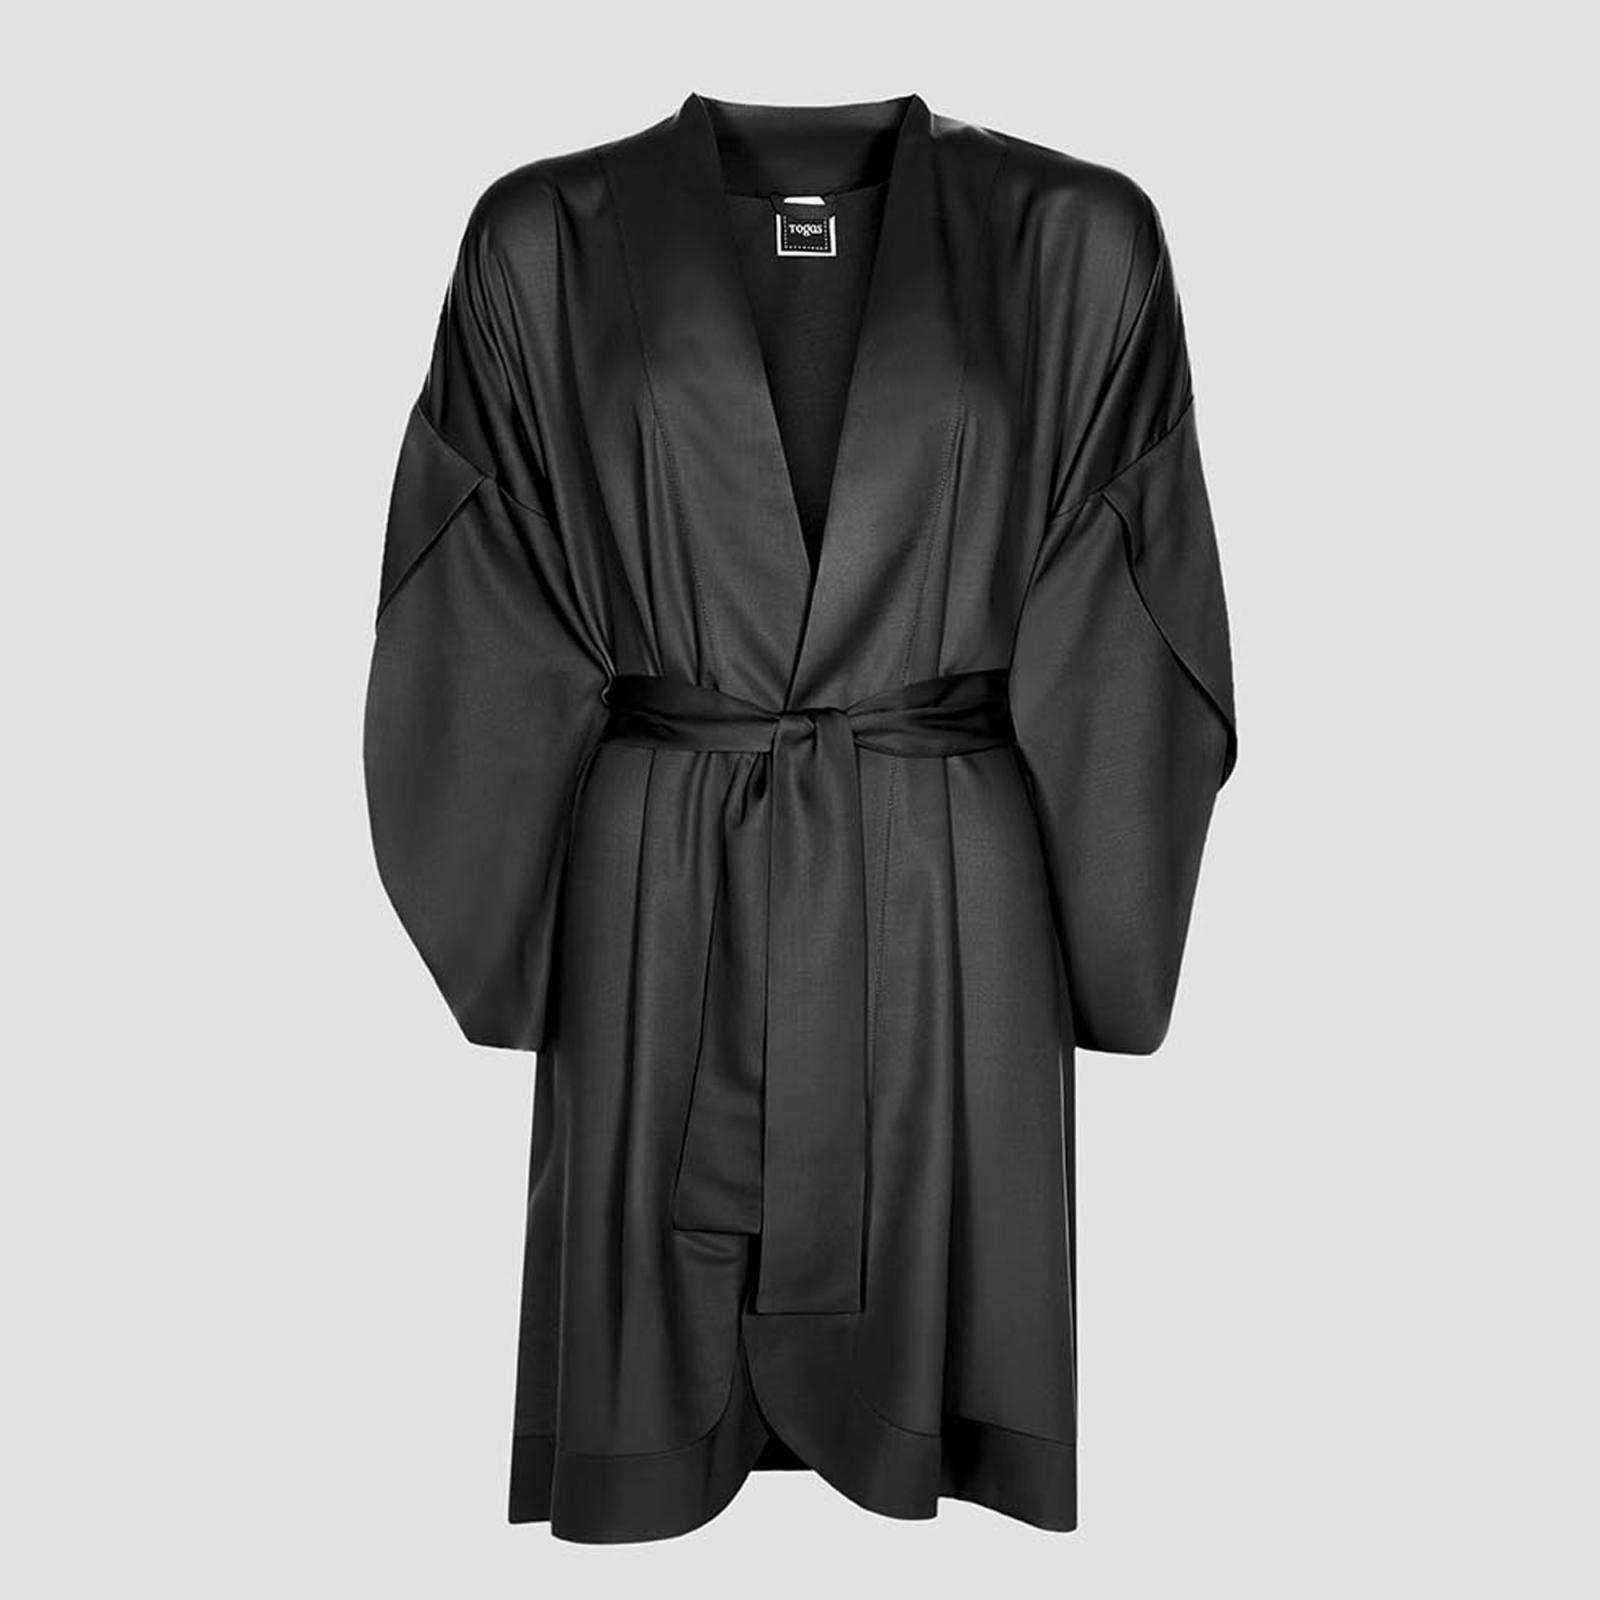 Халат-кимоно короткое Togas Наоми чёрное XS (42)